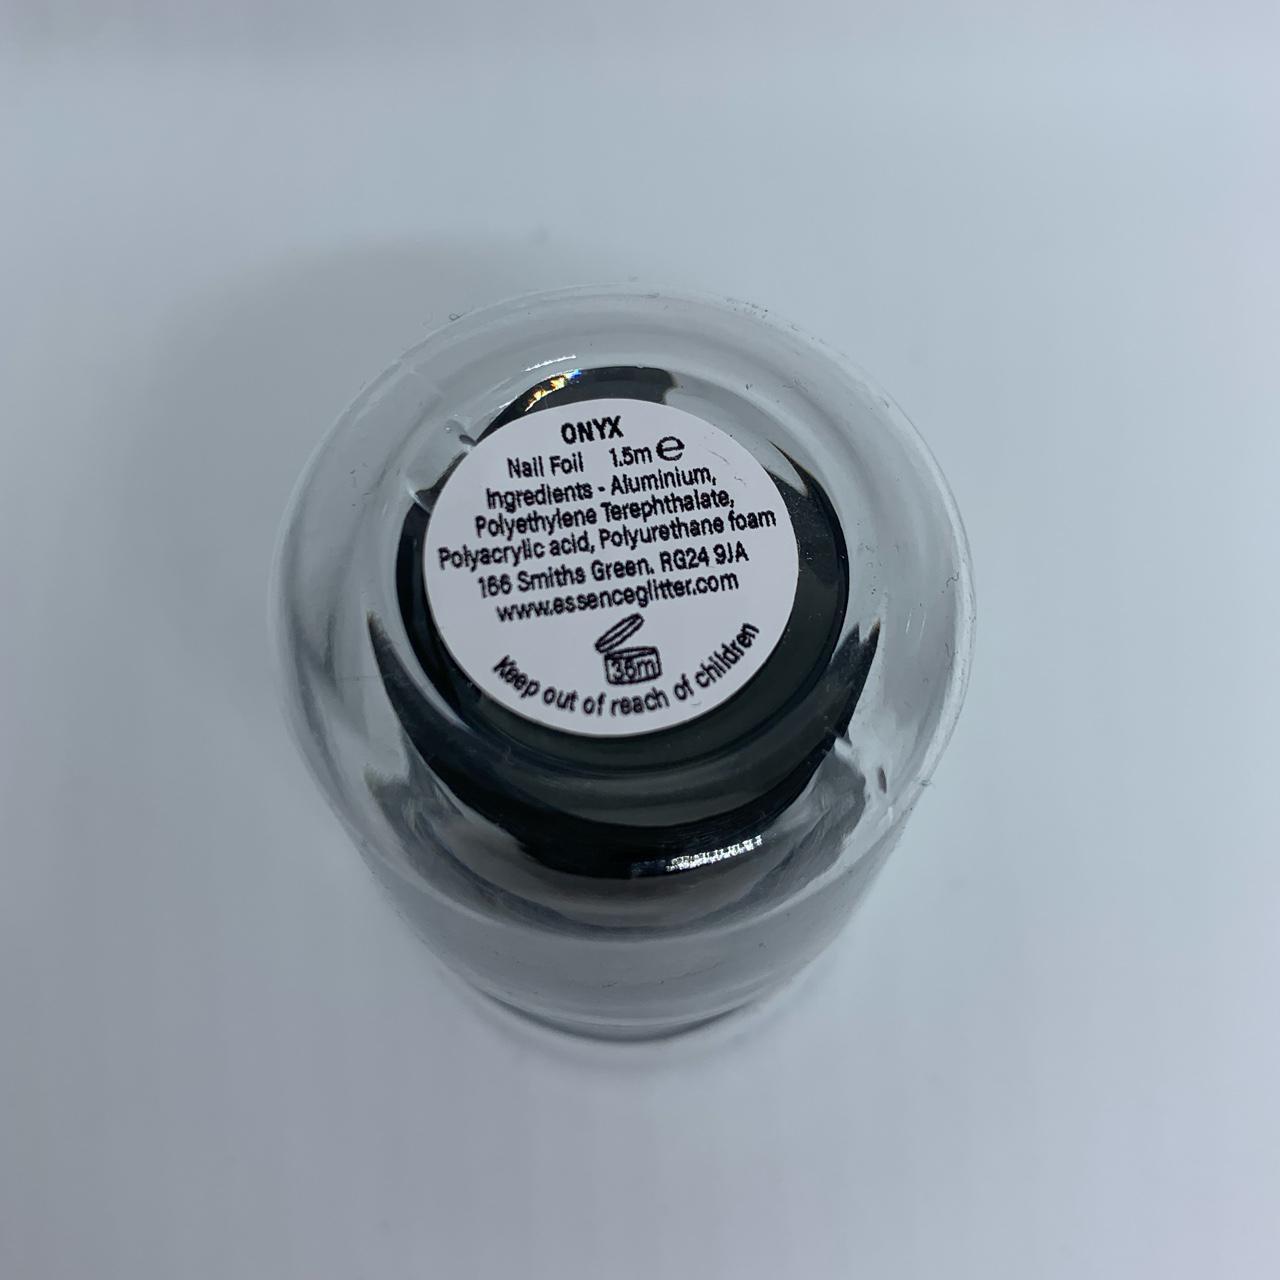 Product Image 2 - Essence glitter black nail art